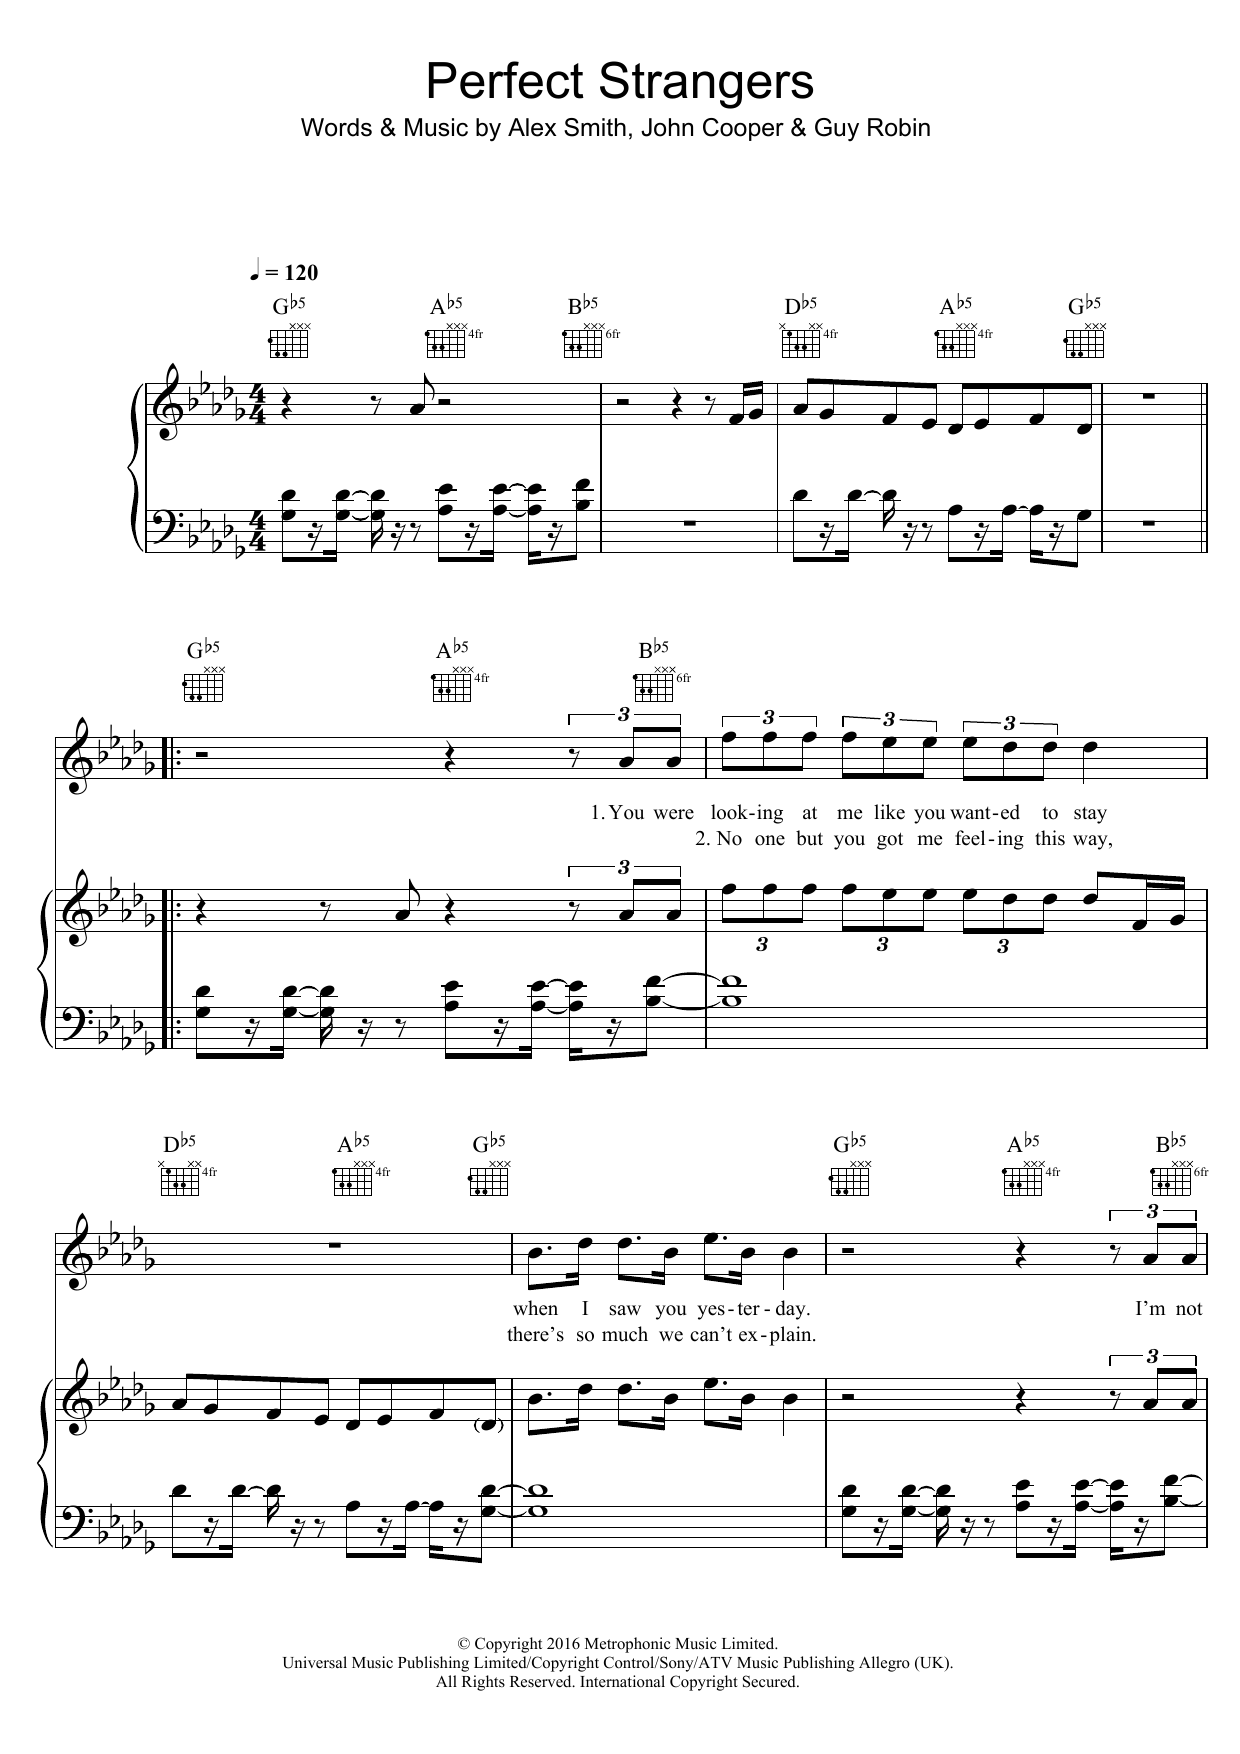 Perfect Strangers (Jonas Blue song) - Wikipedia